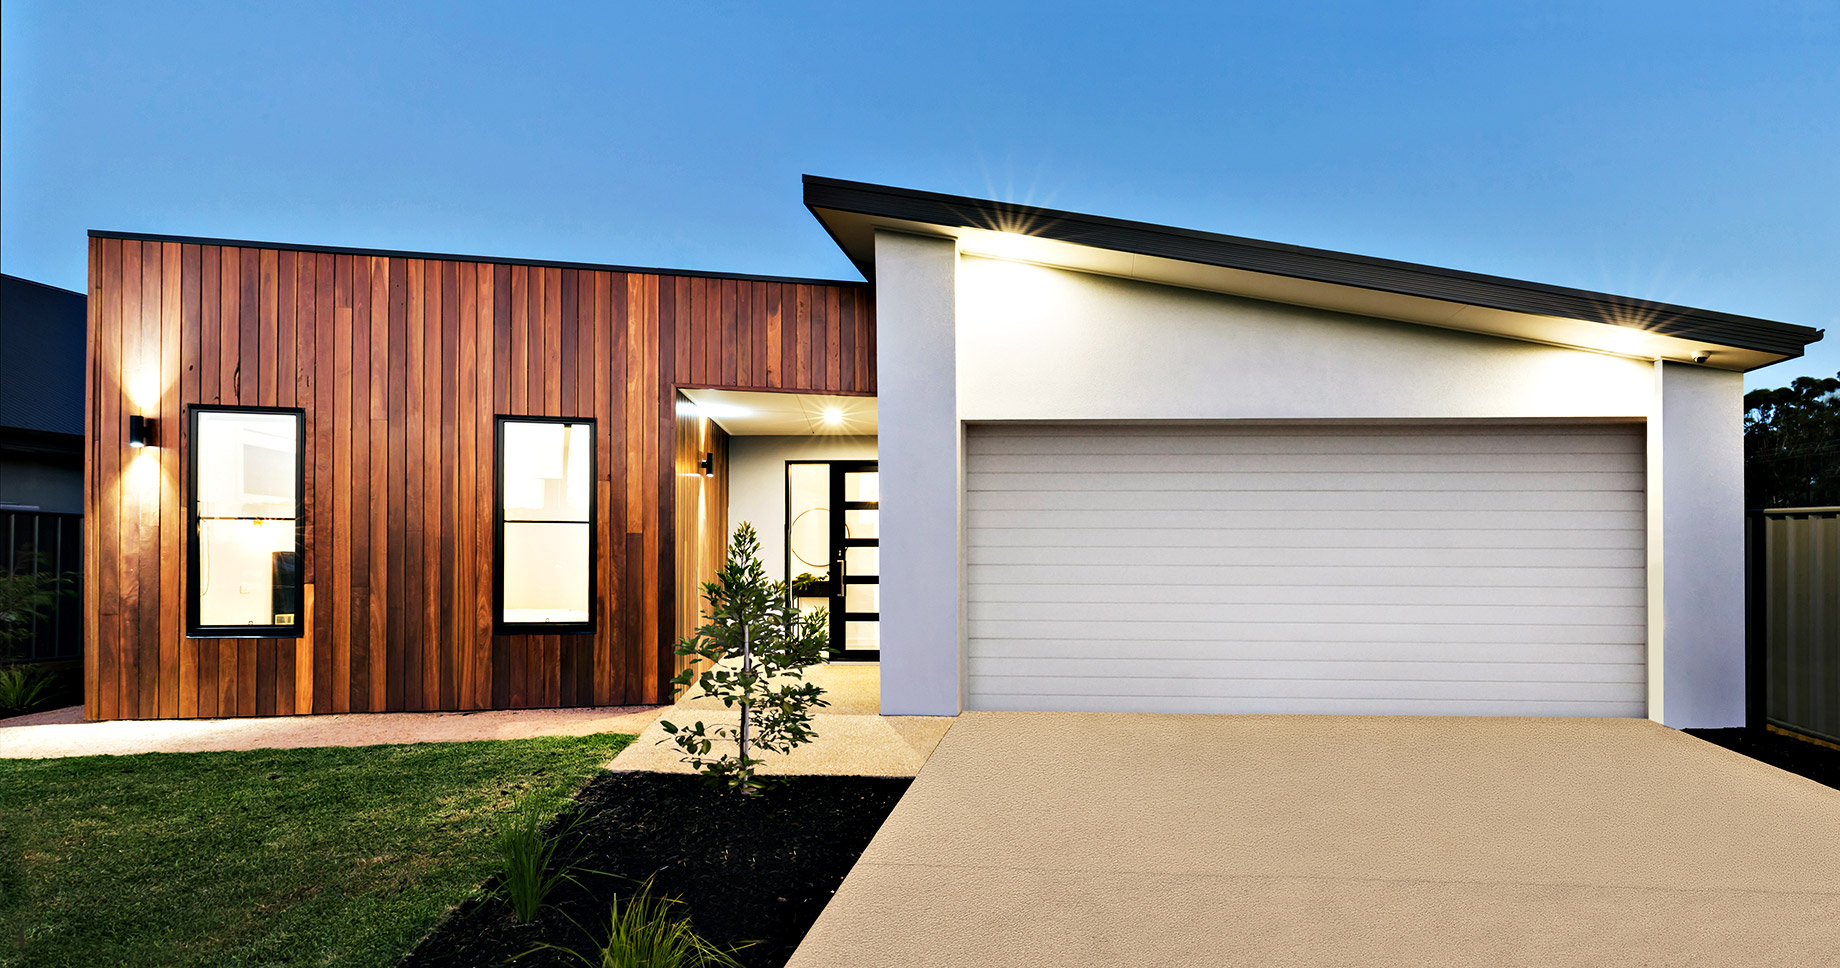 Flat Roof - Modern Contemporary Australian Home